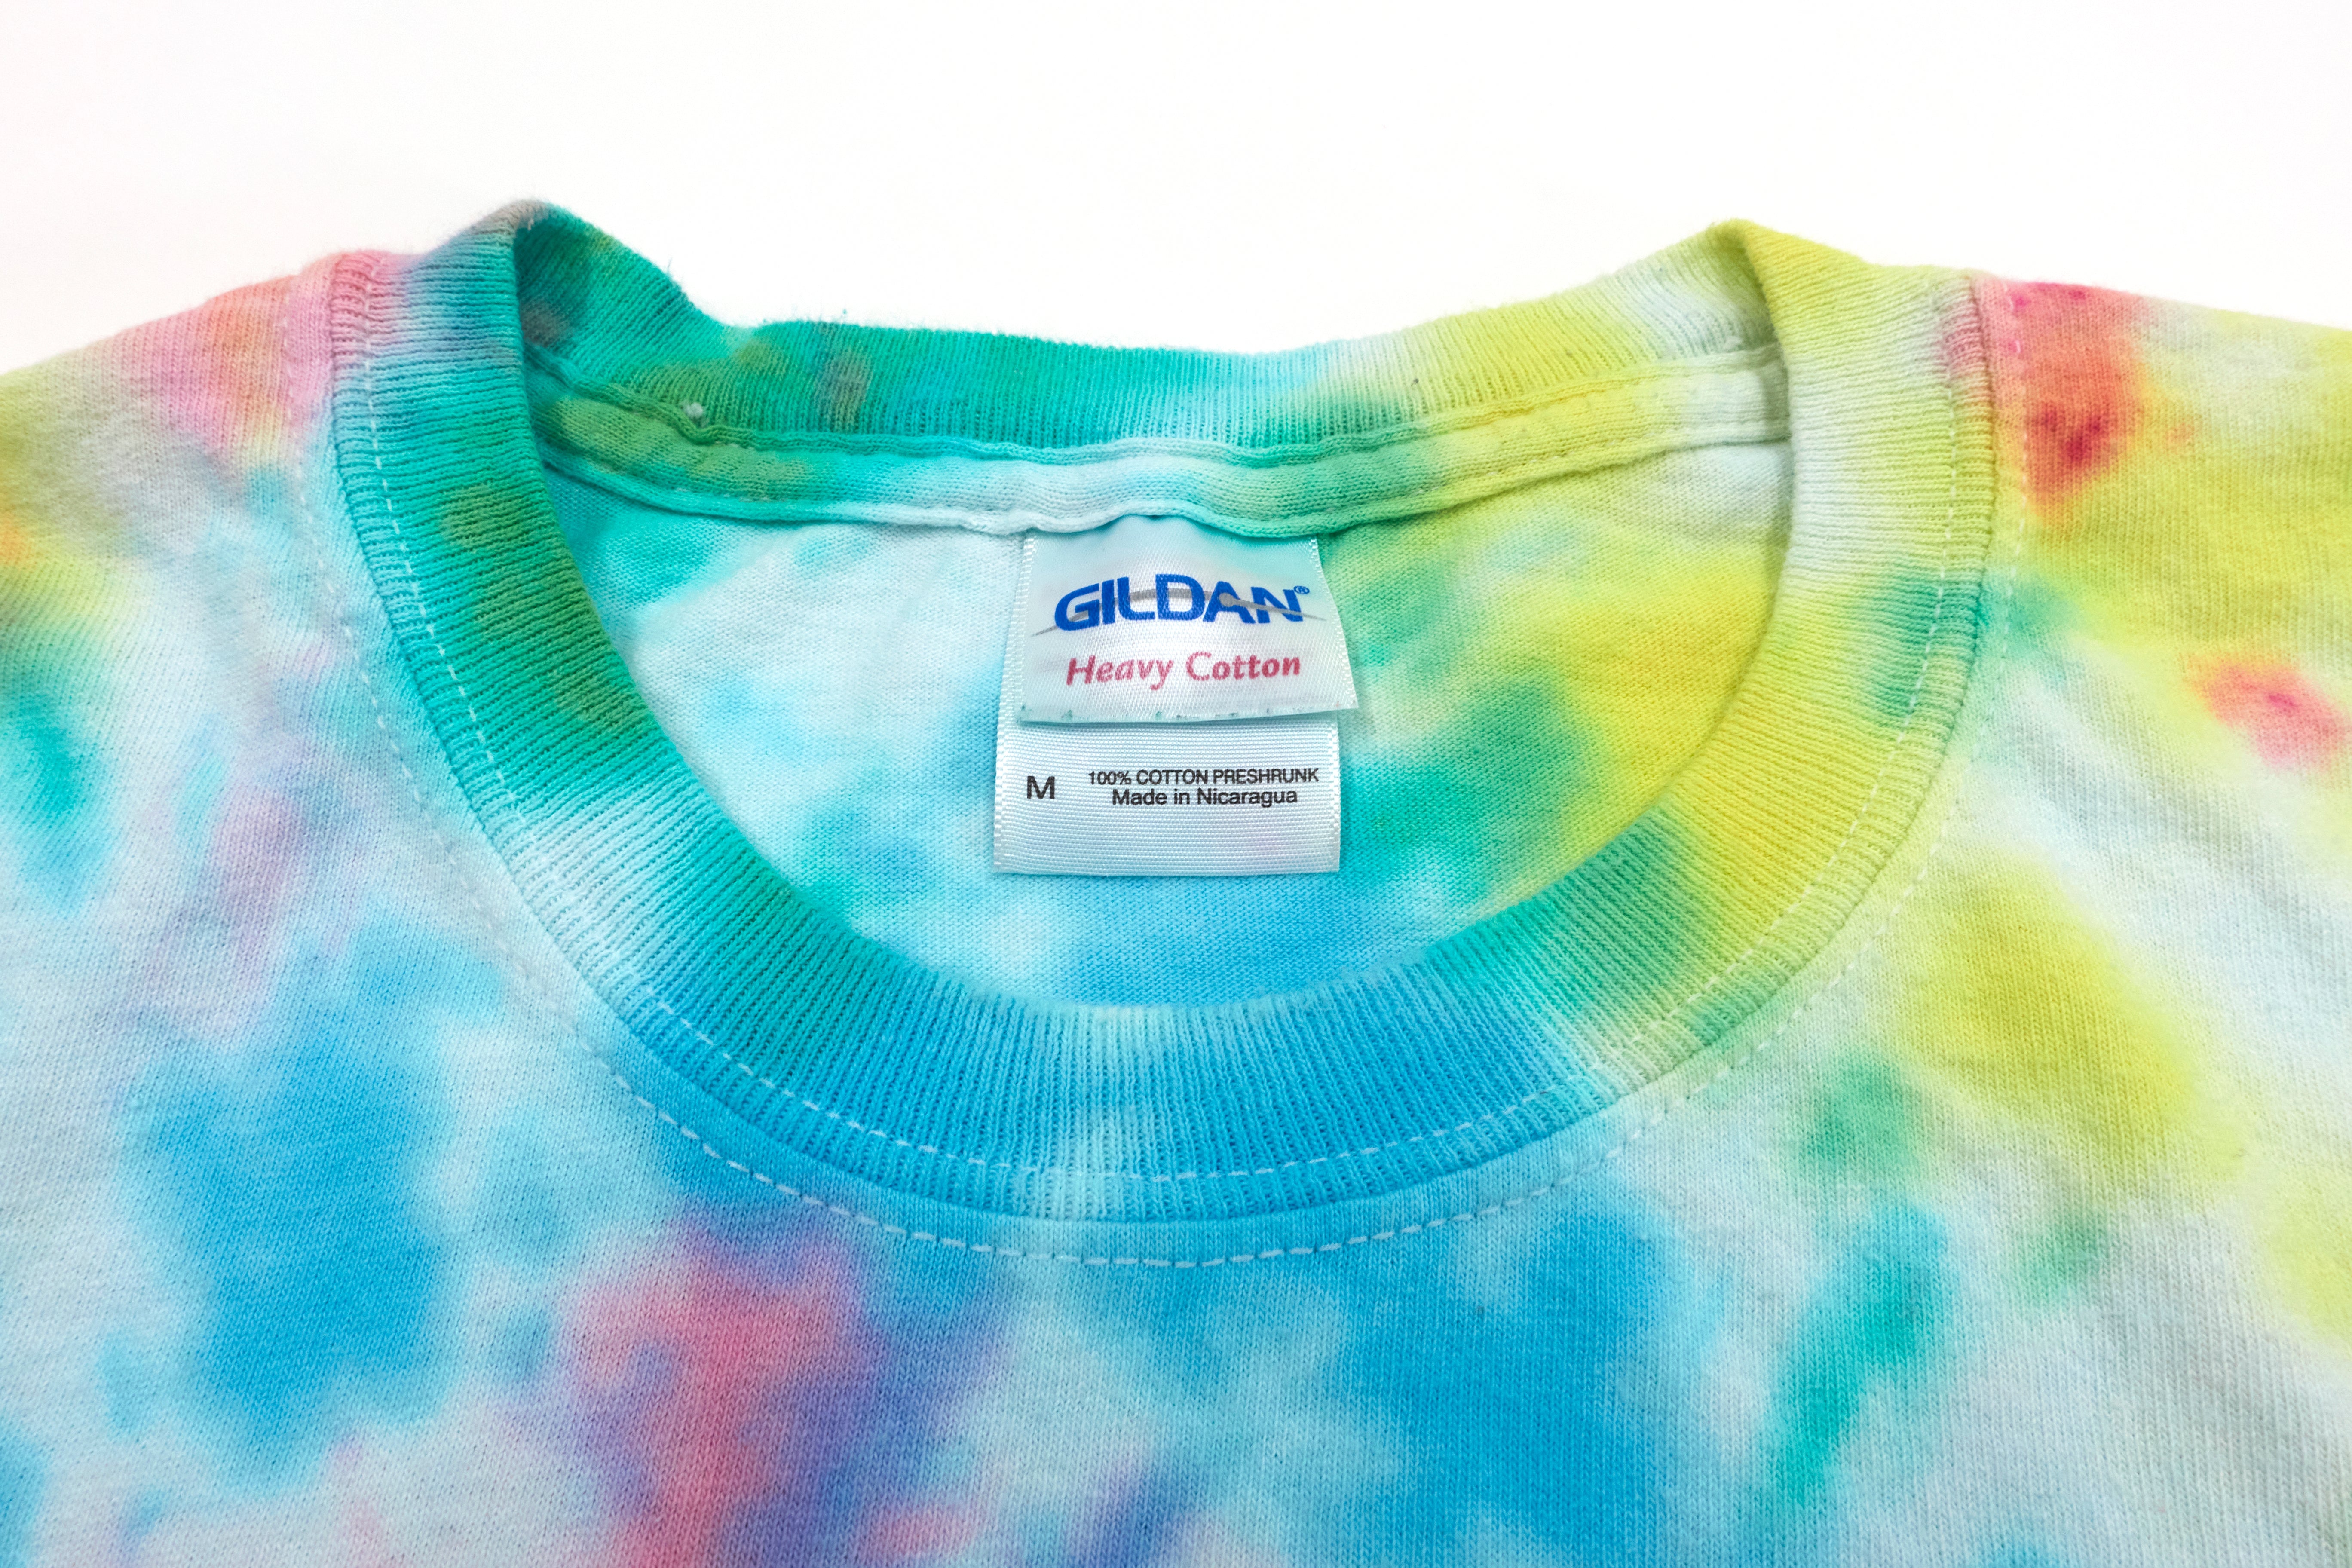 Give – Electric Flower Summer 2014 Tour Shirt Size Medium